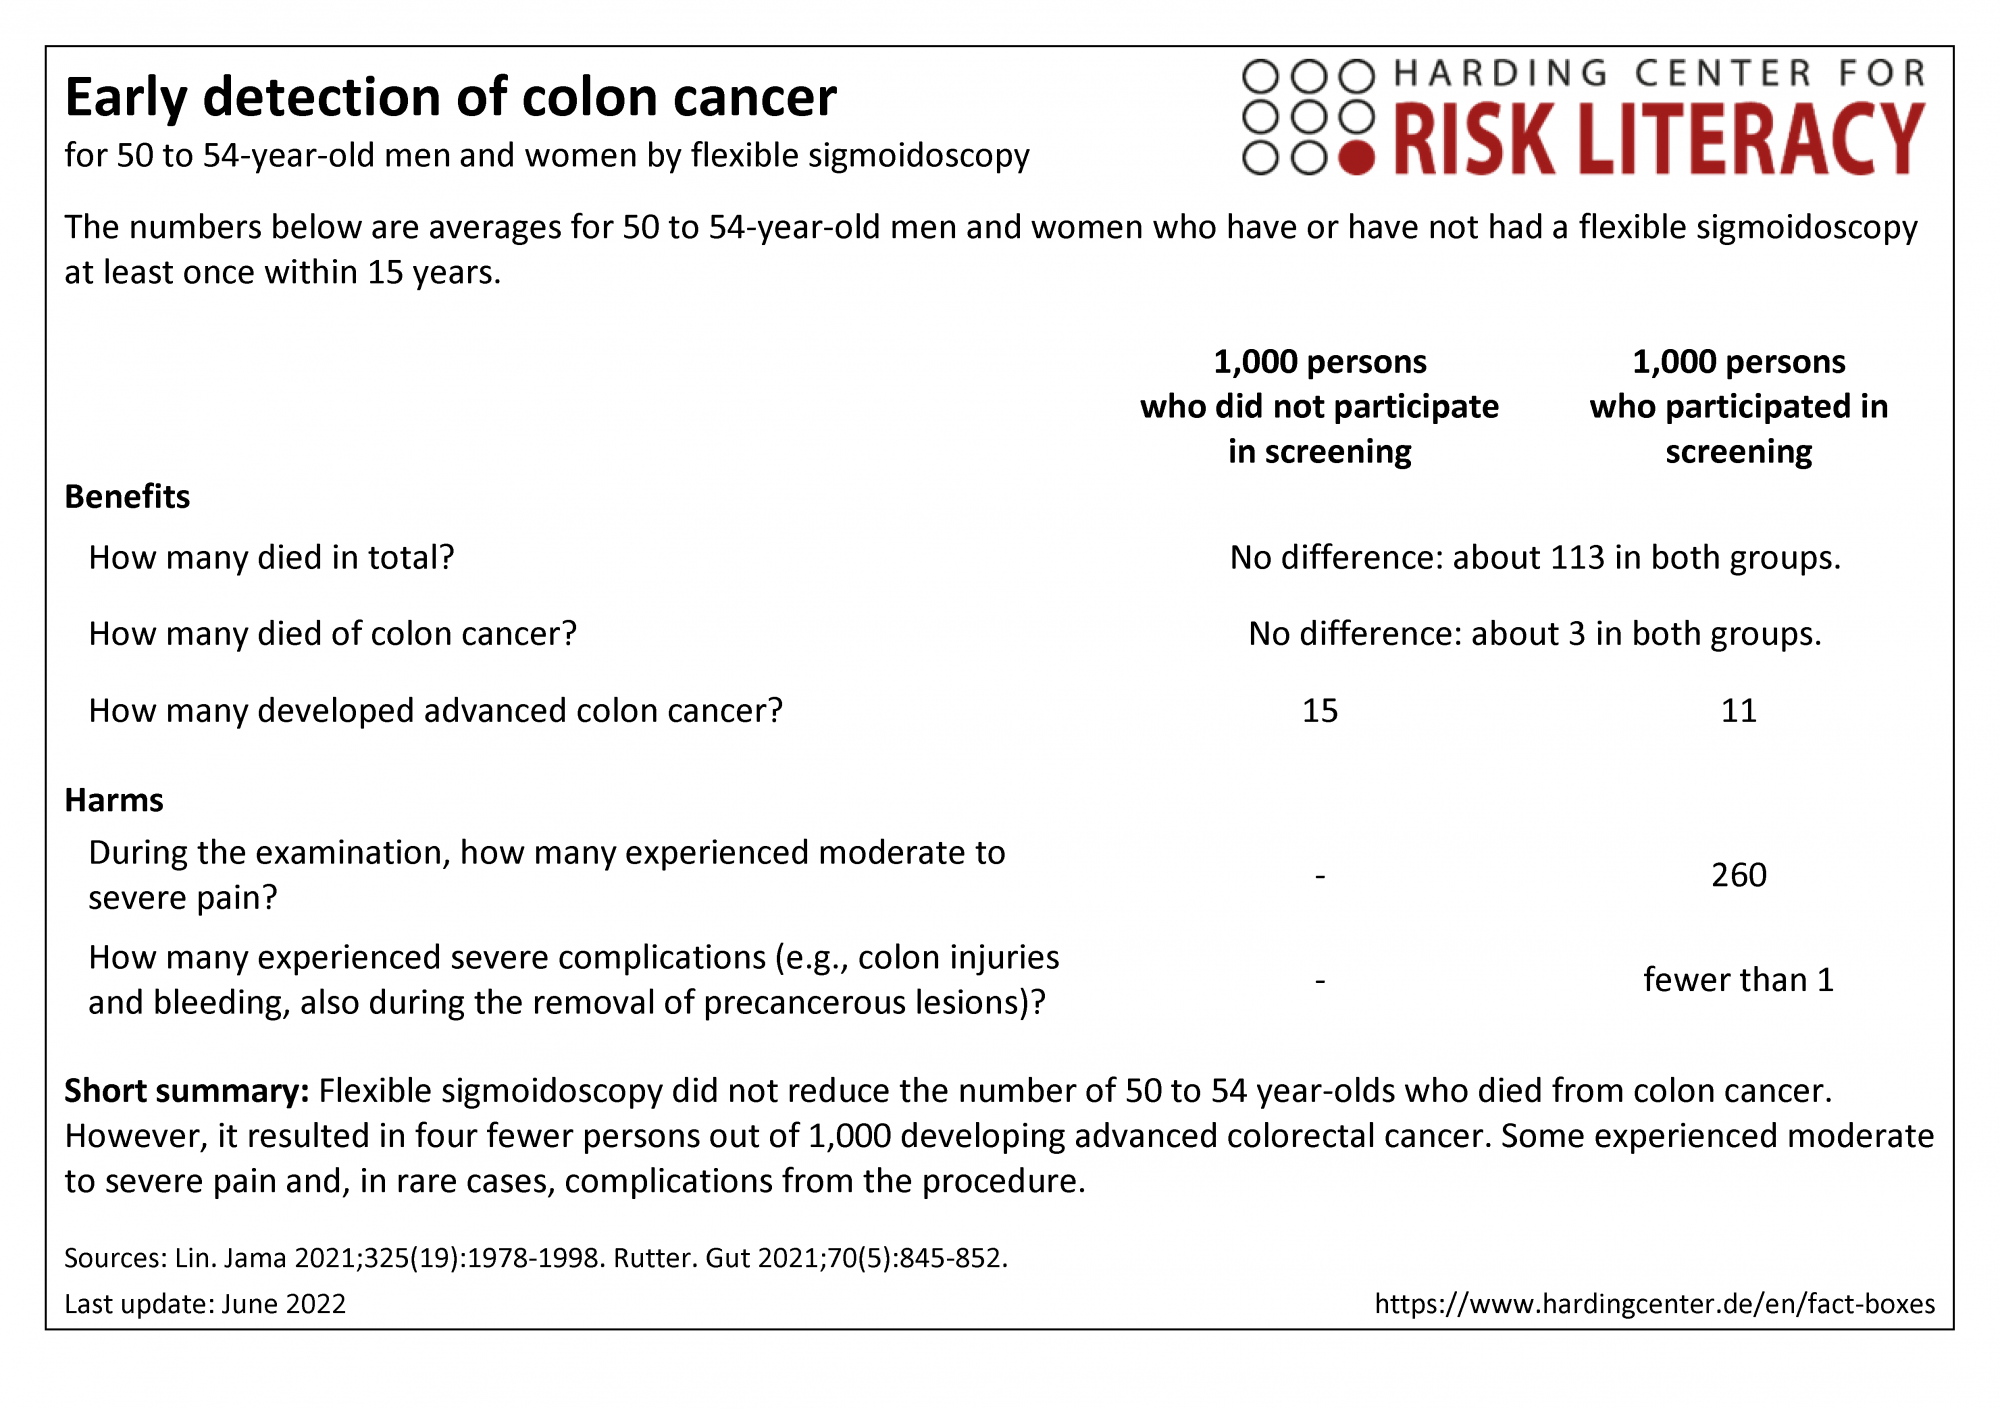 Fact box early detection of colon cancer by flexible sigmoidoscopy